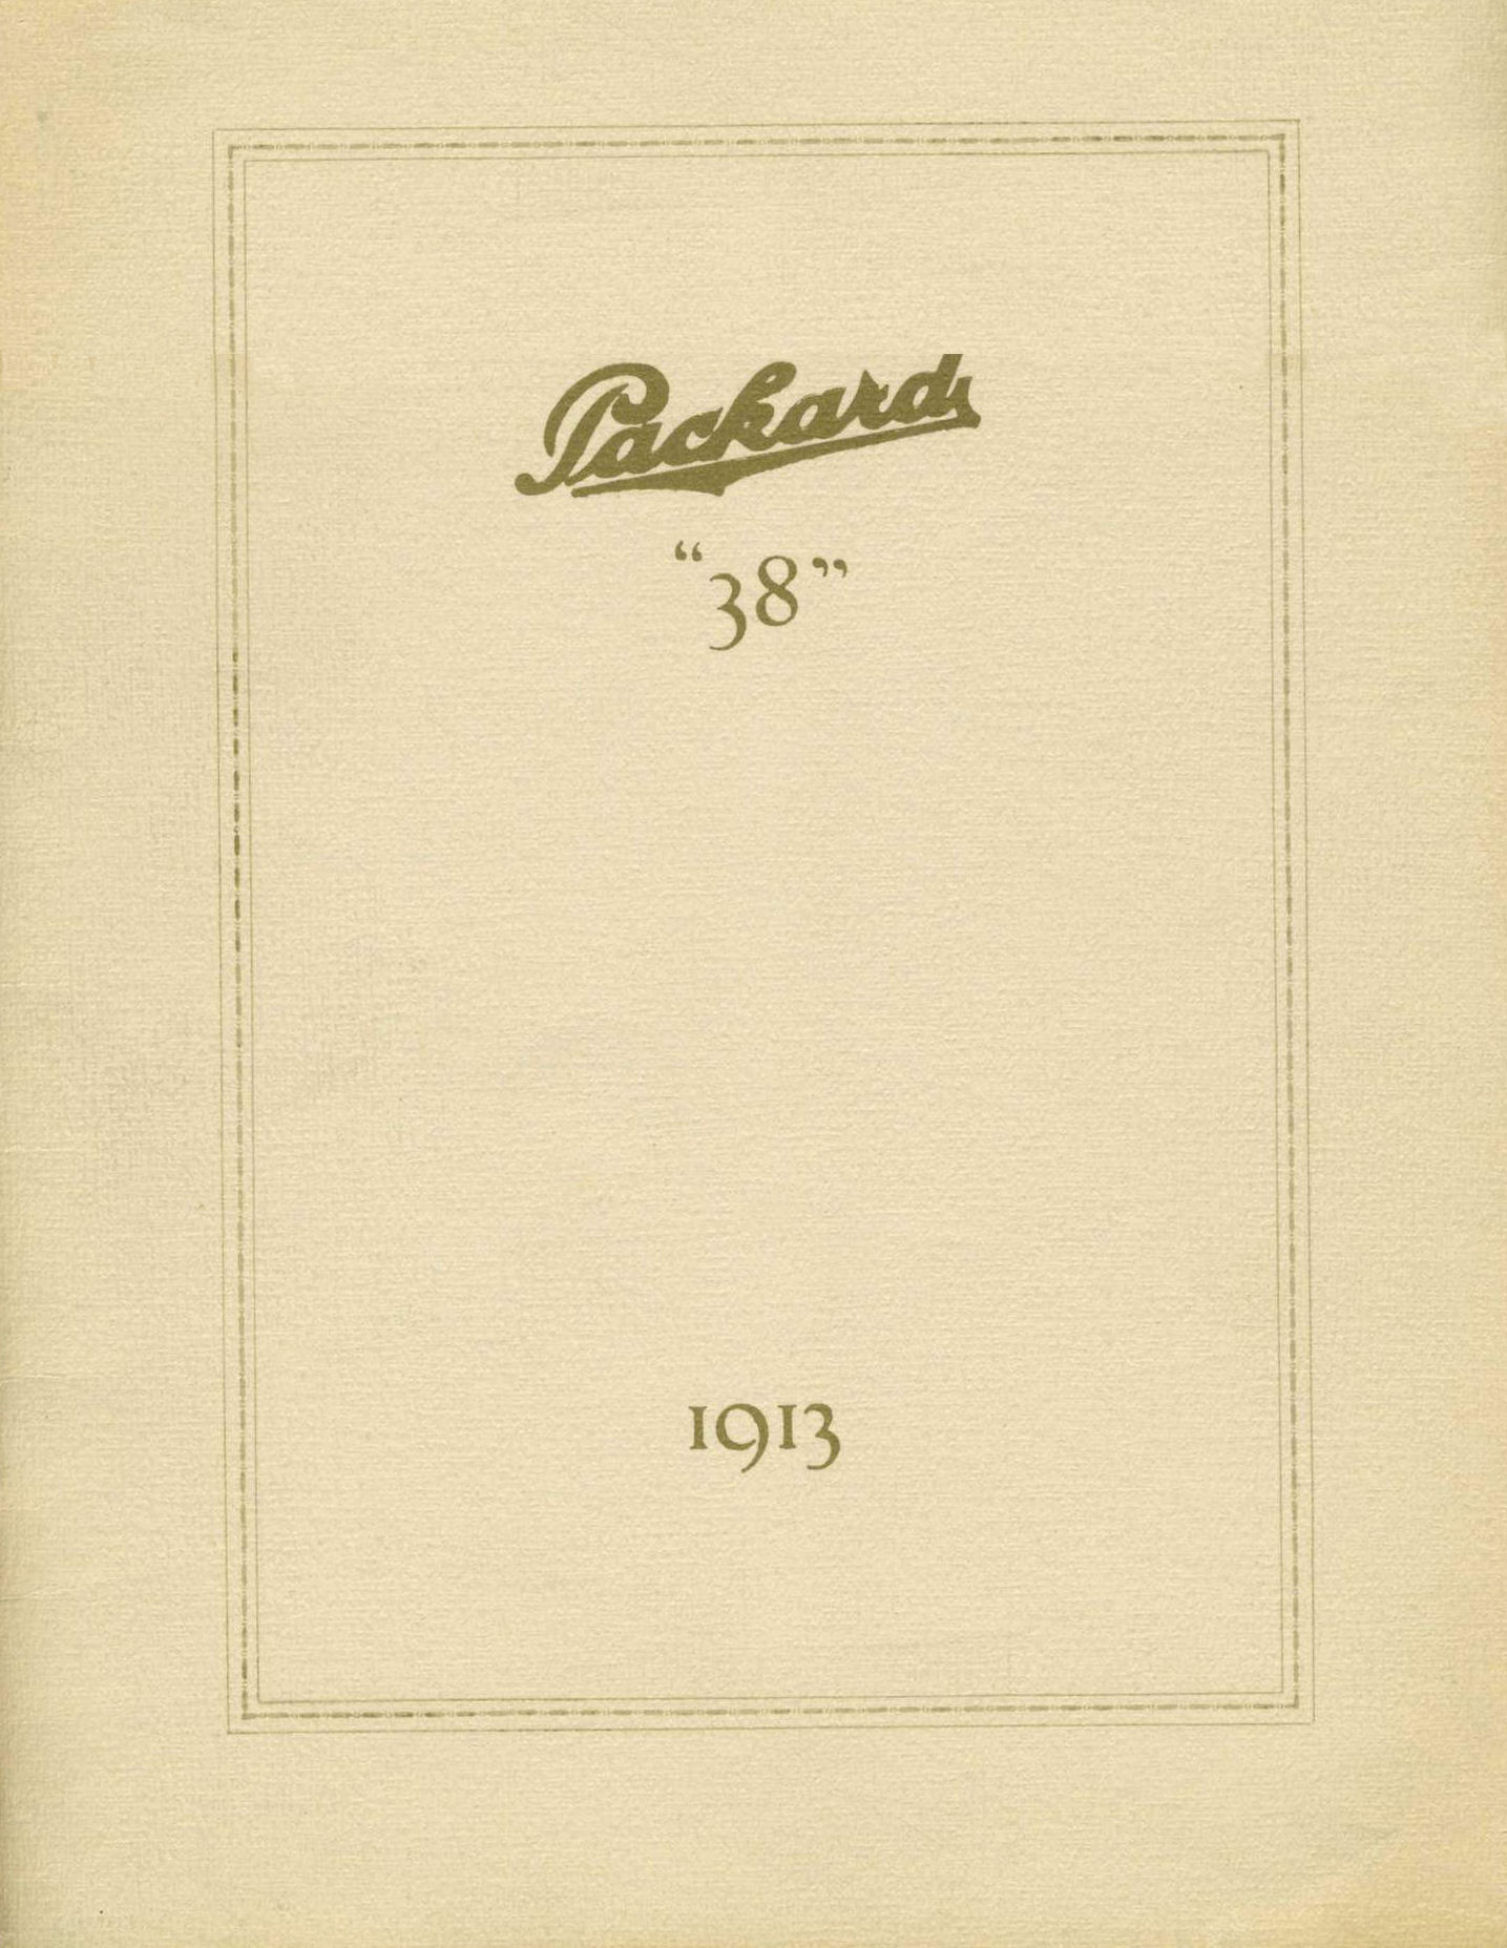 1913_Packard_38_Brochure-00